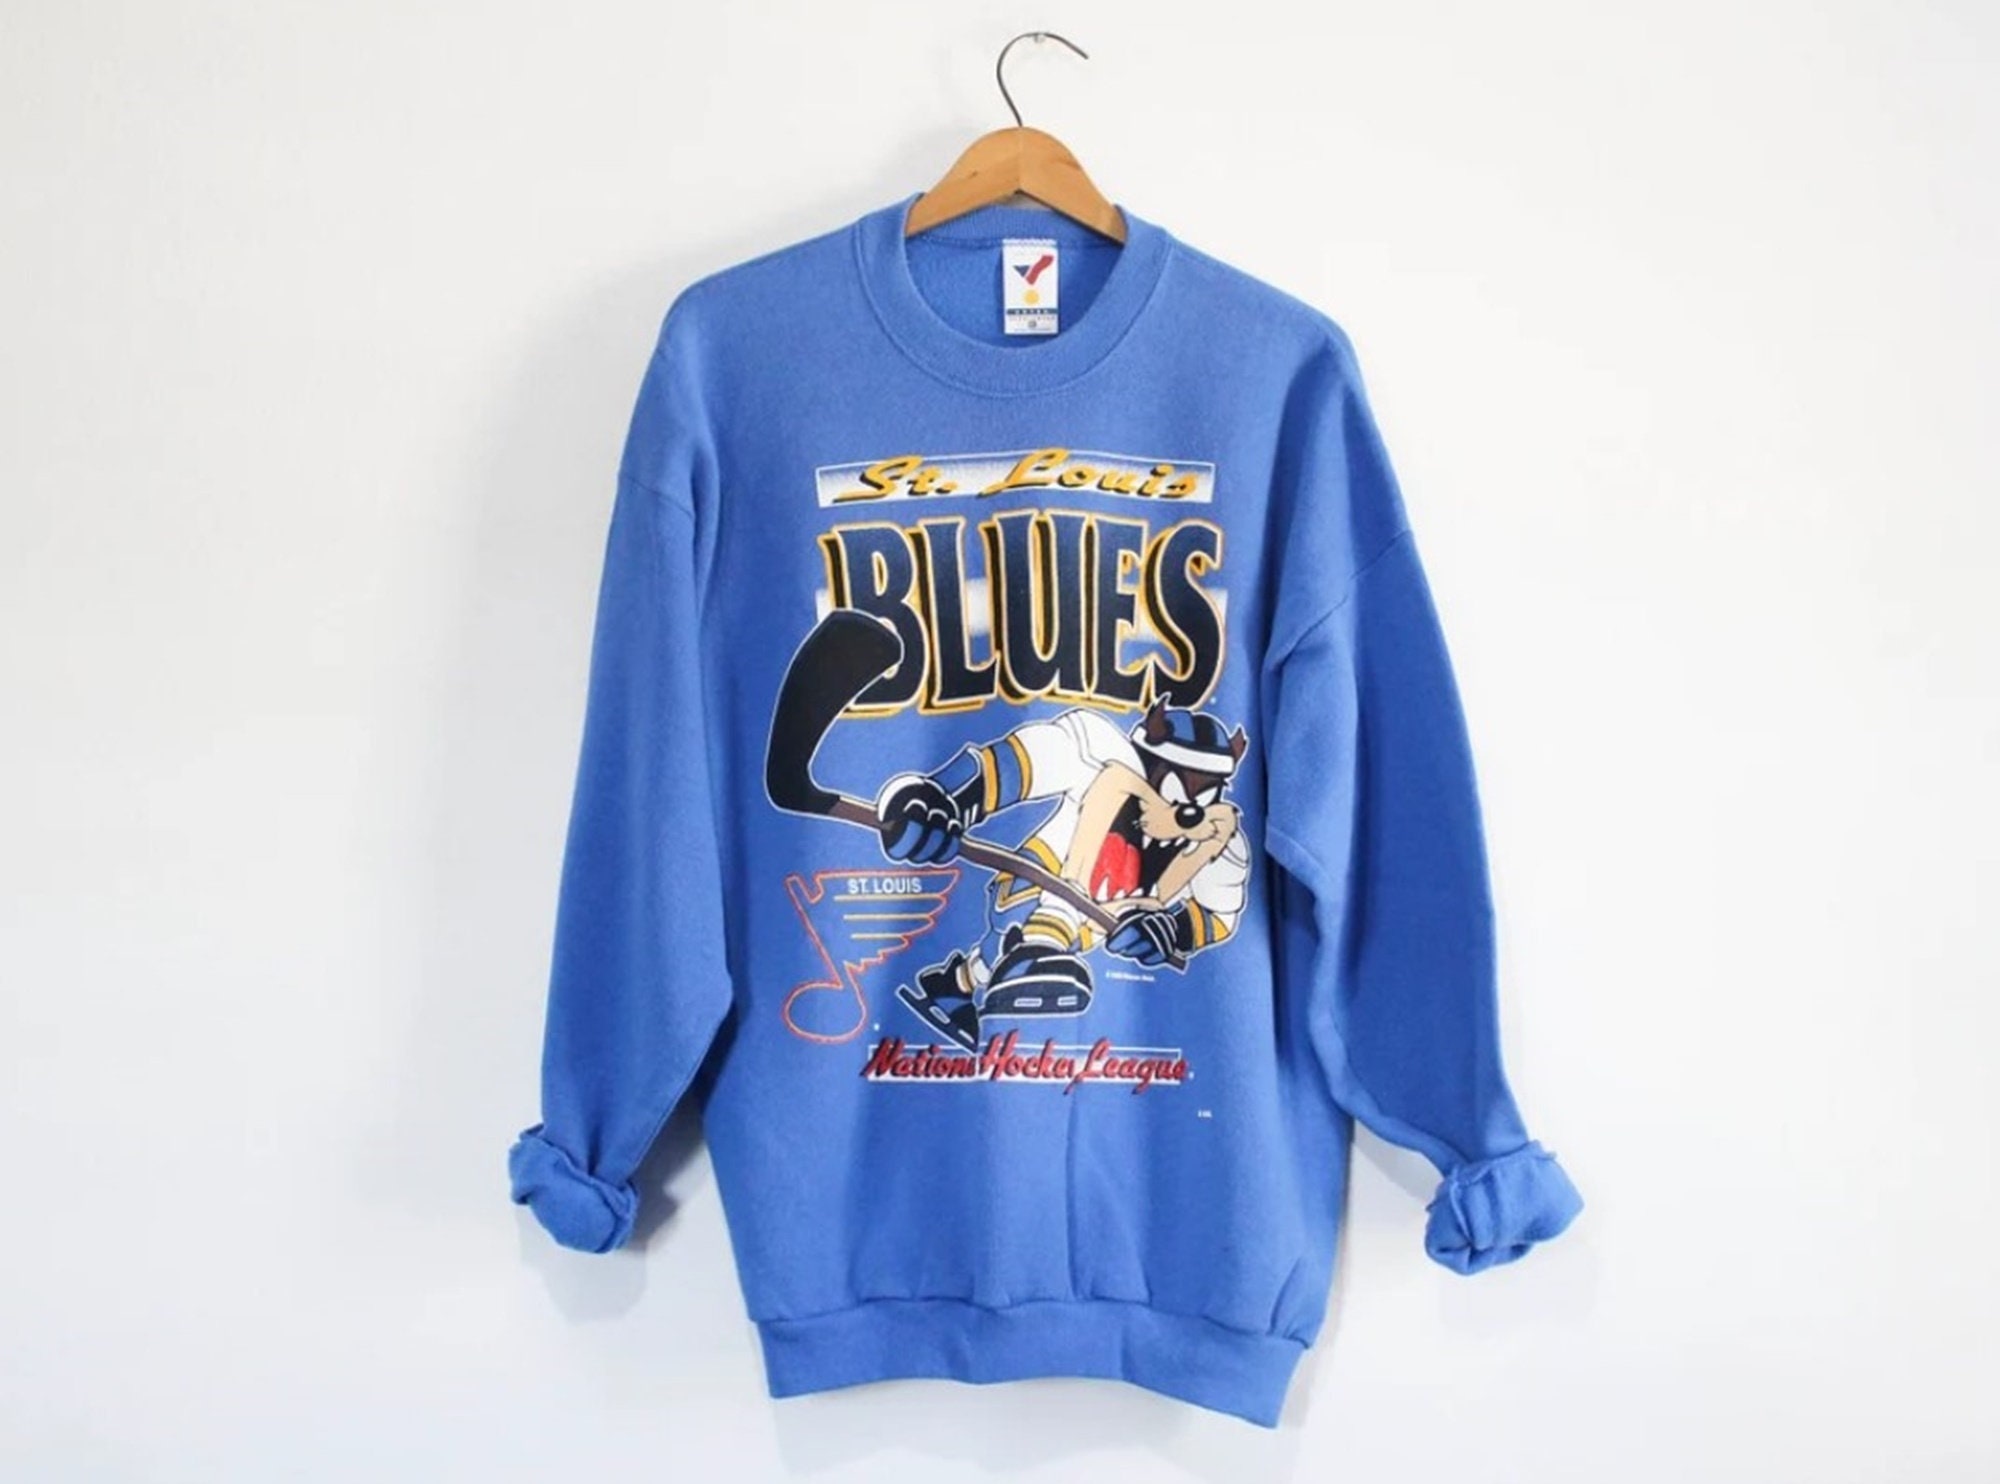 Vintage 80s St. Louis Blues Hockey Sweatshirt - Trends Bedding